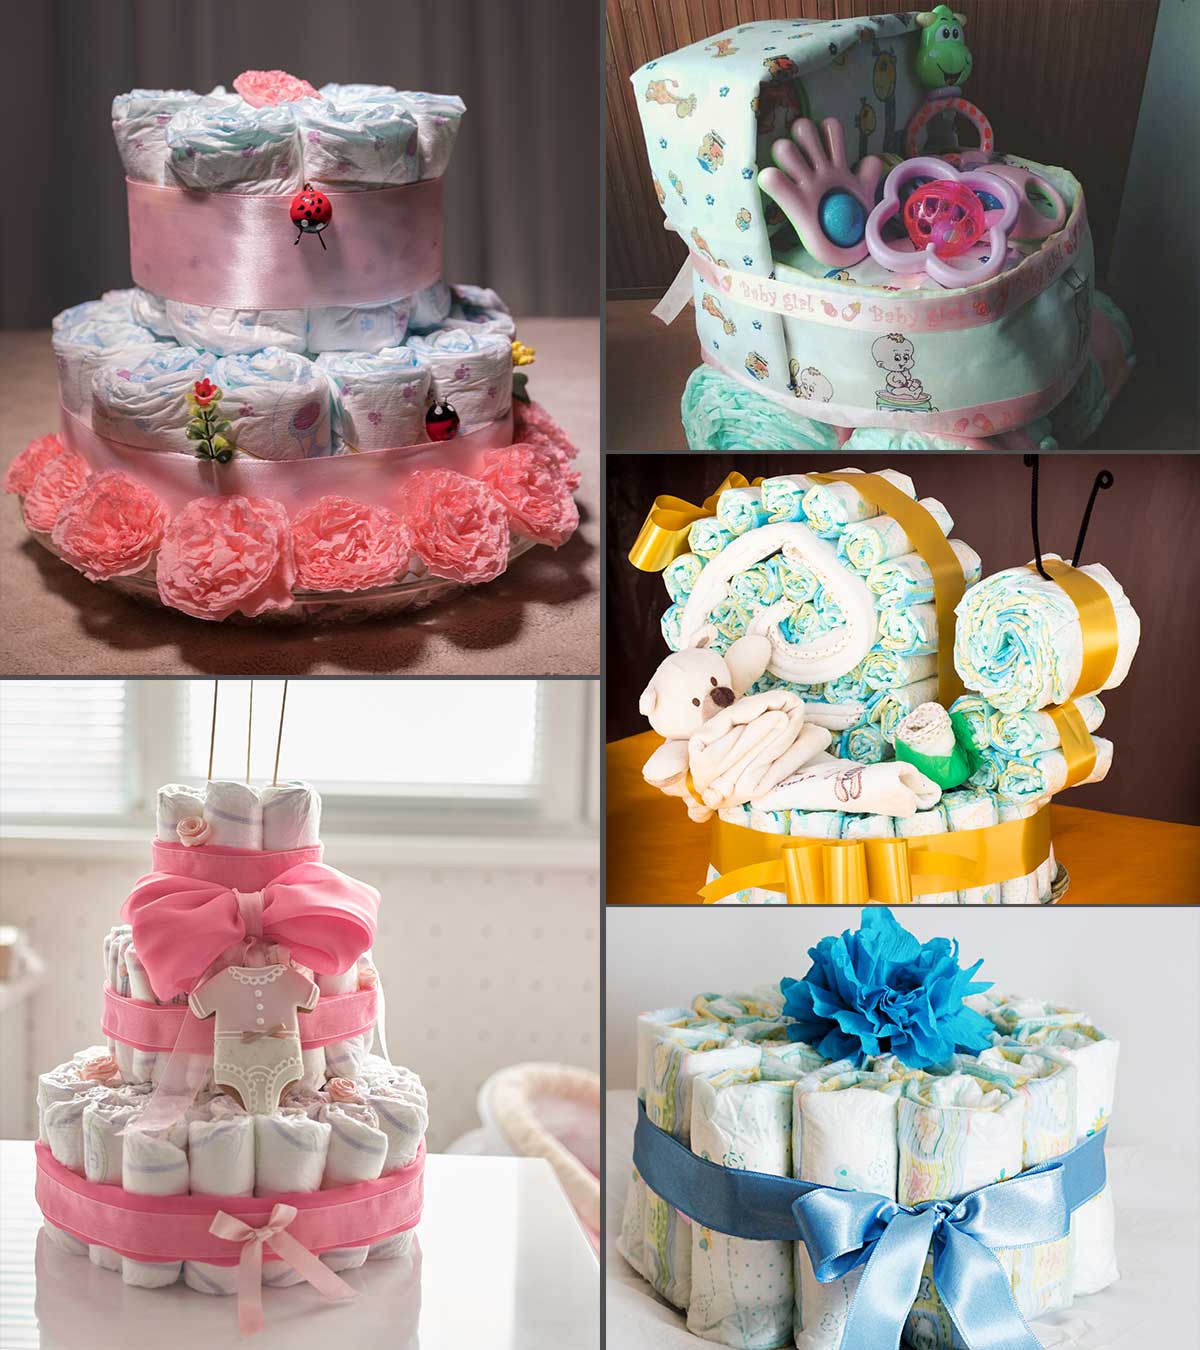 nappy cake ideas girl